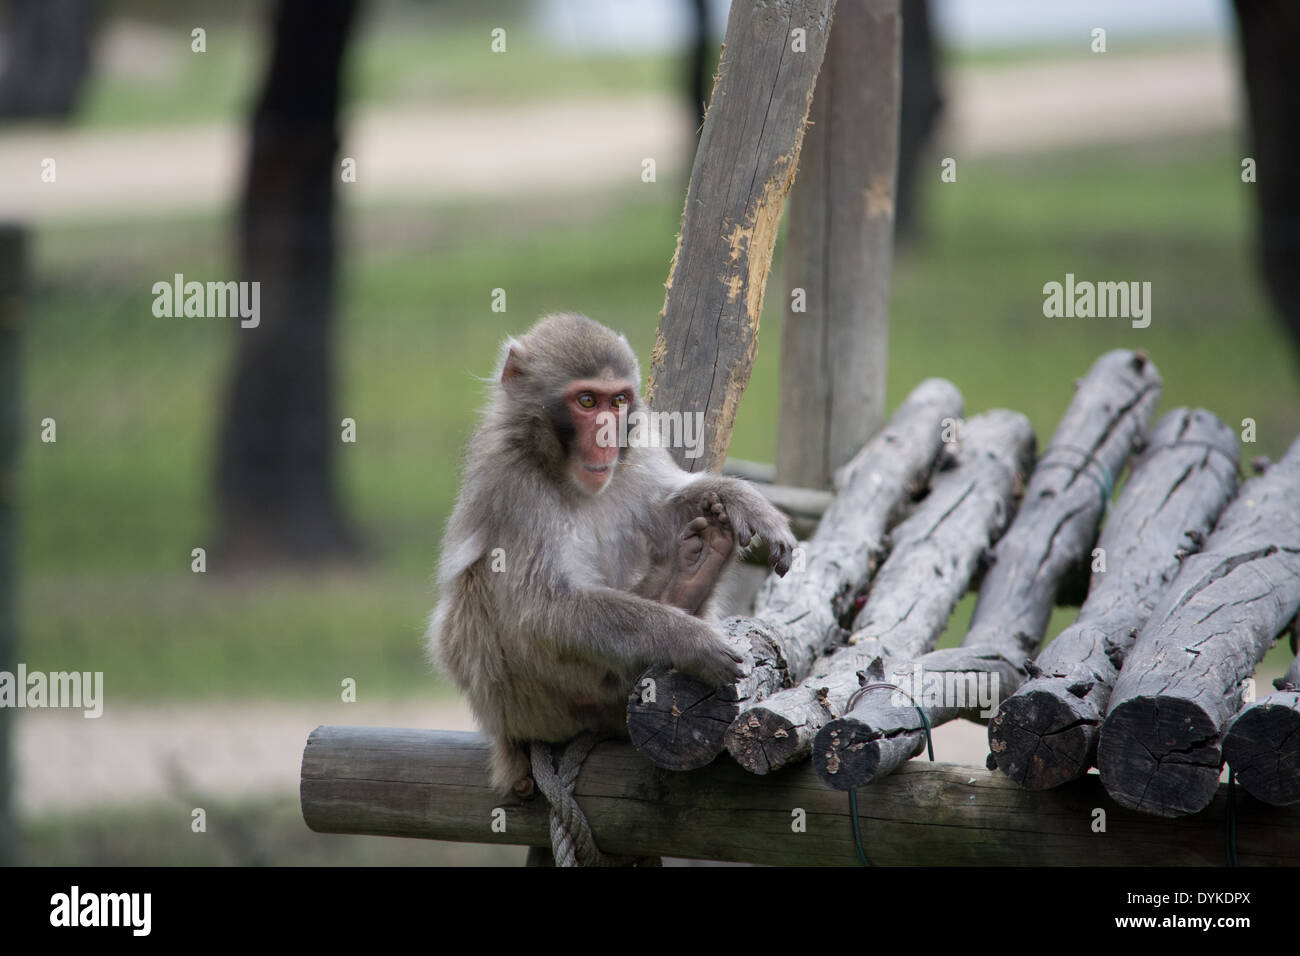 monkey sitting down Stock Photo